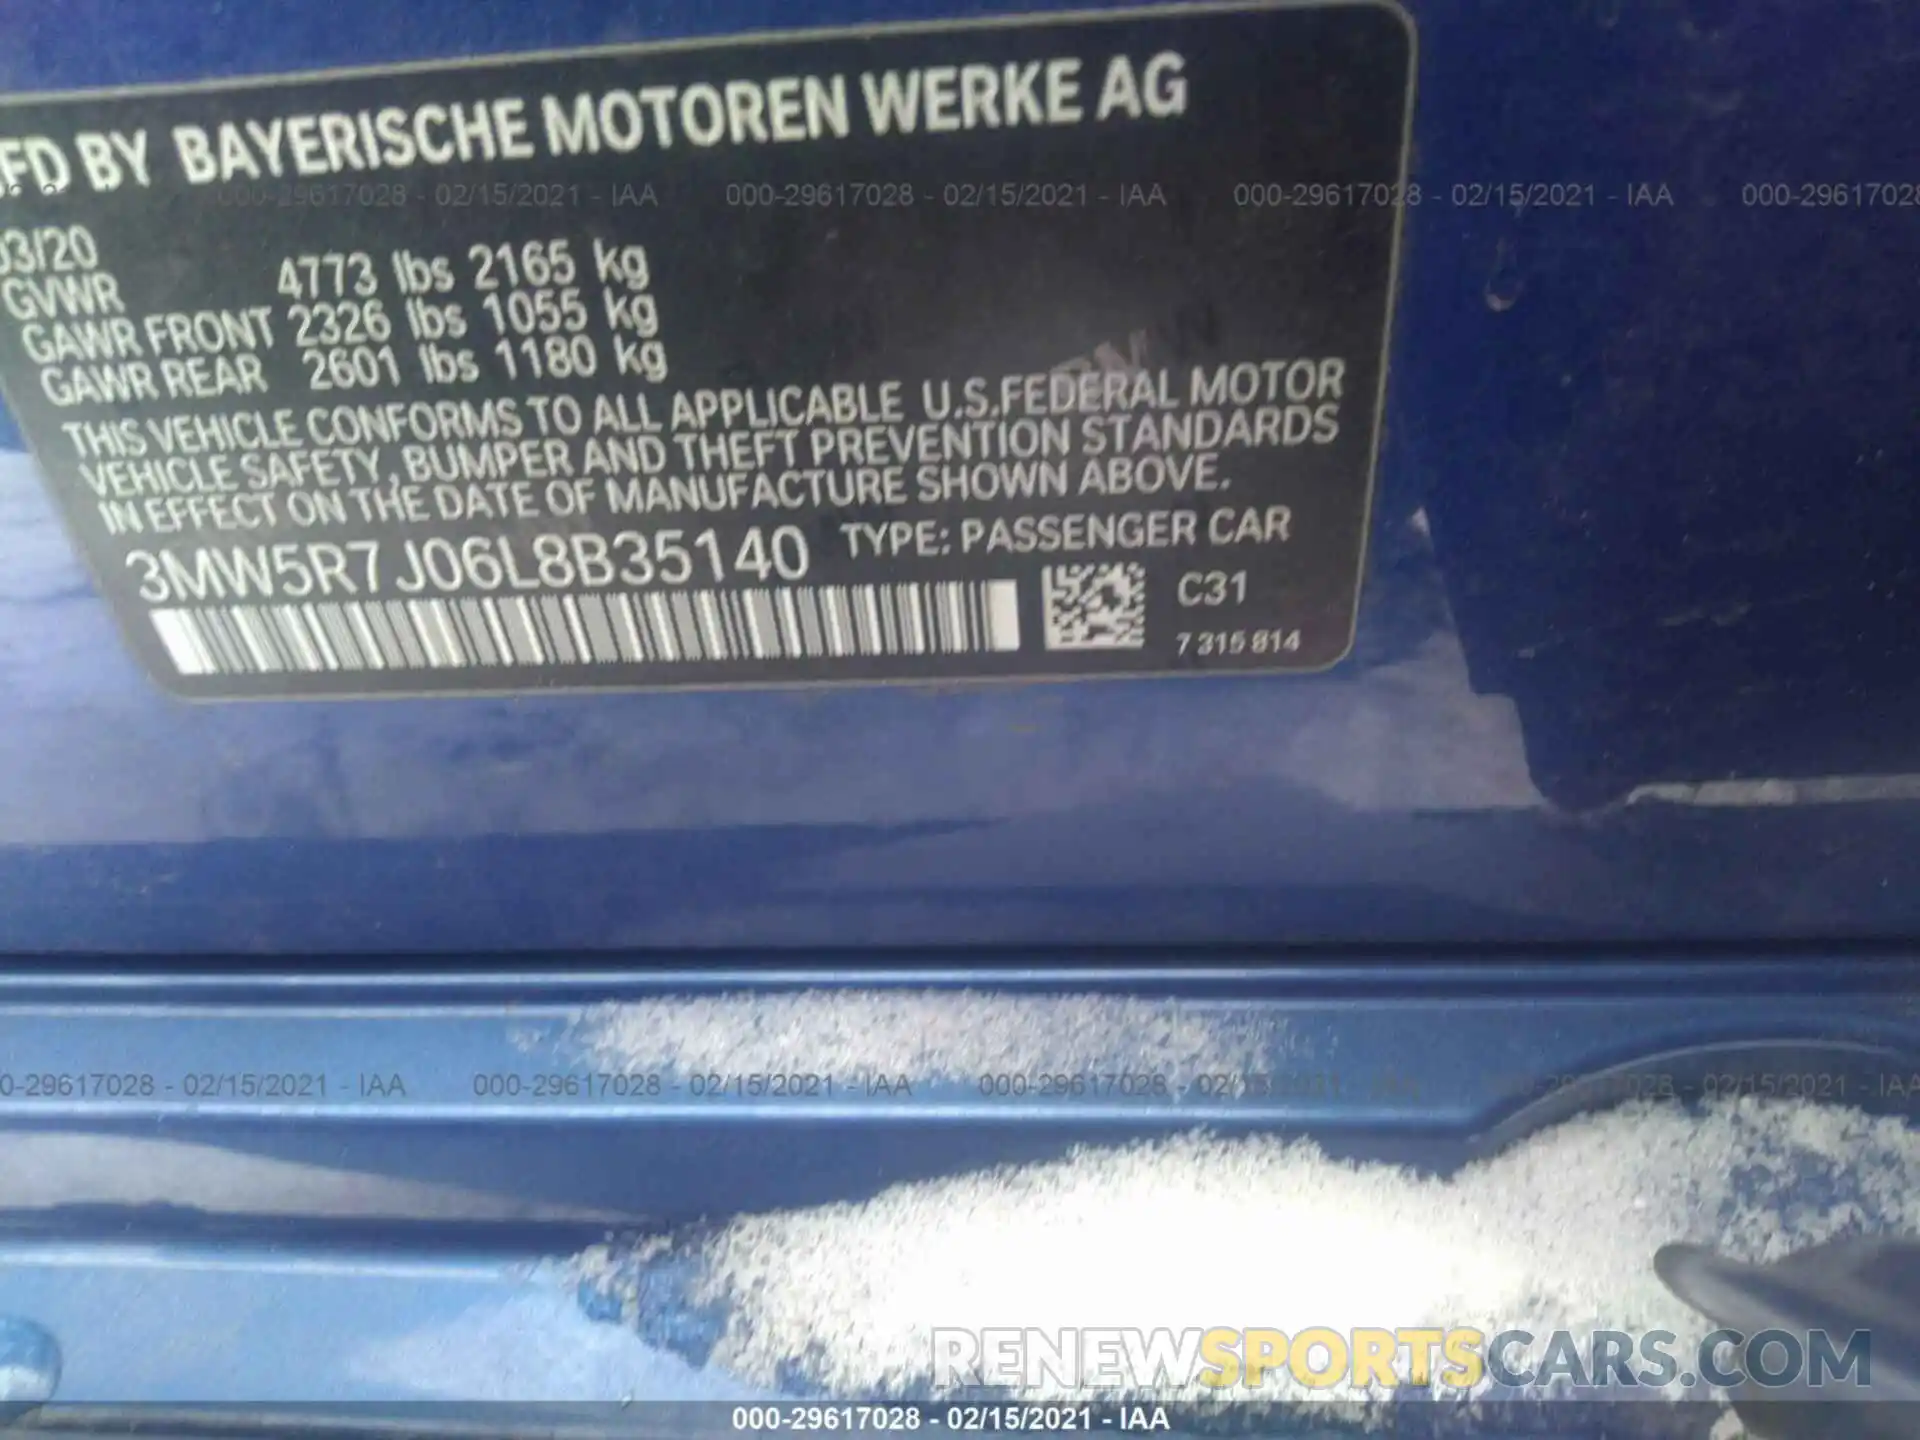 9 Photograph of a damaged car 3MW5R7J06L8B35140 BMW 3 SERIES 2020